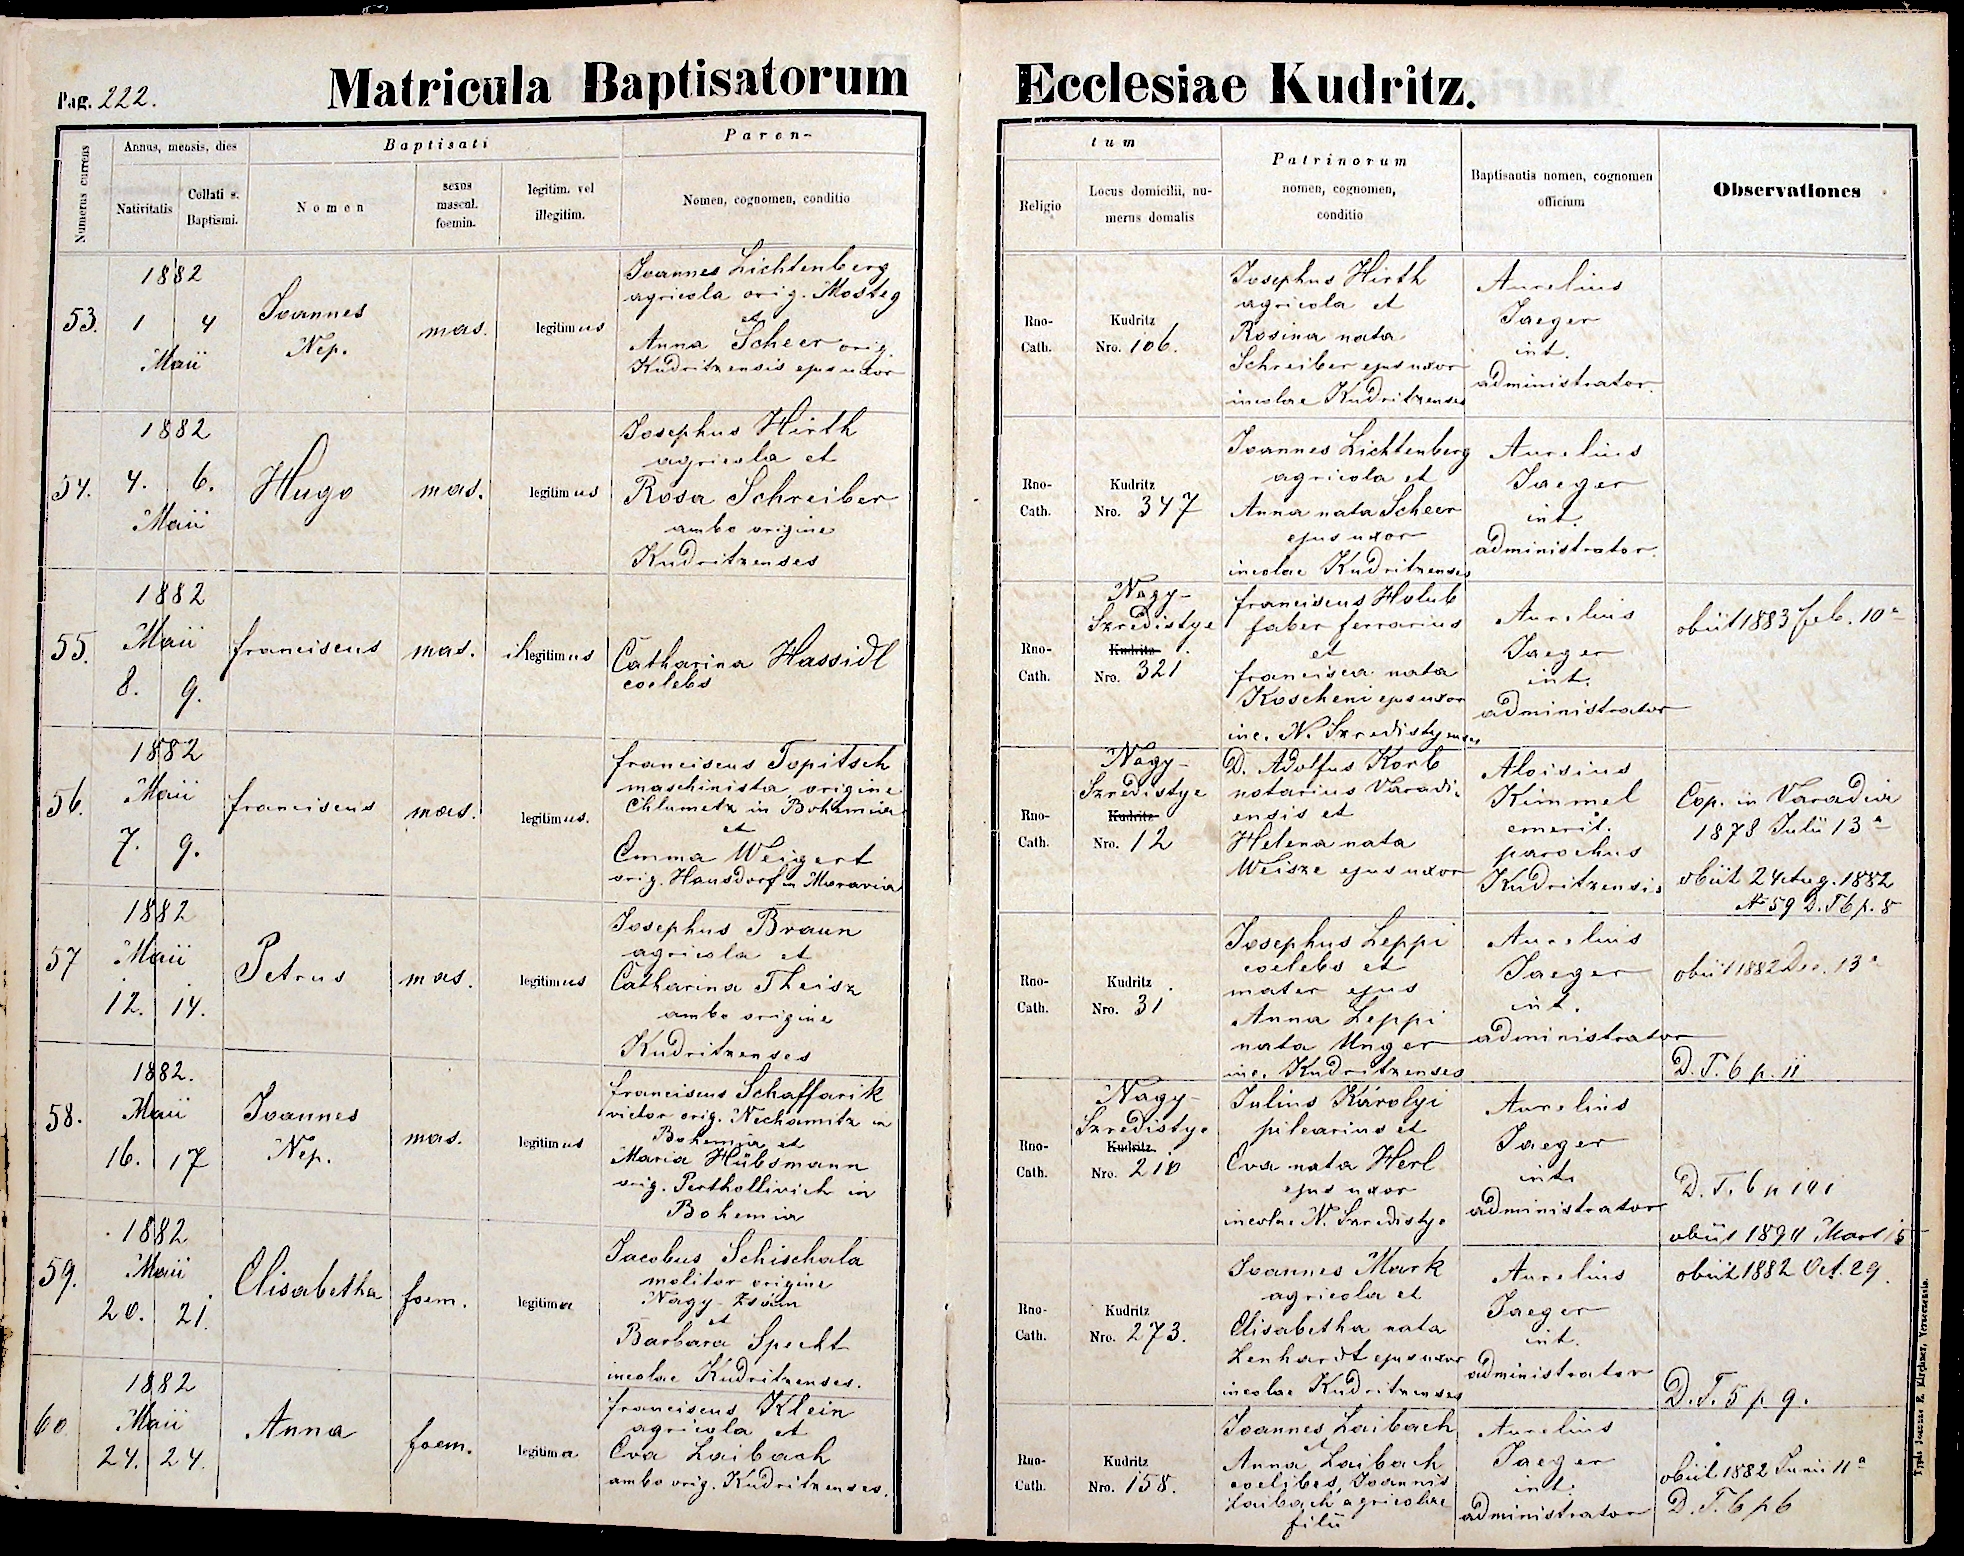 images/church_records/BIRTHS/1880-1883B/1882/222